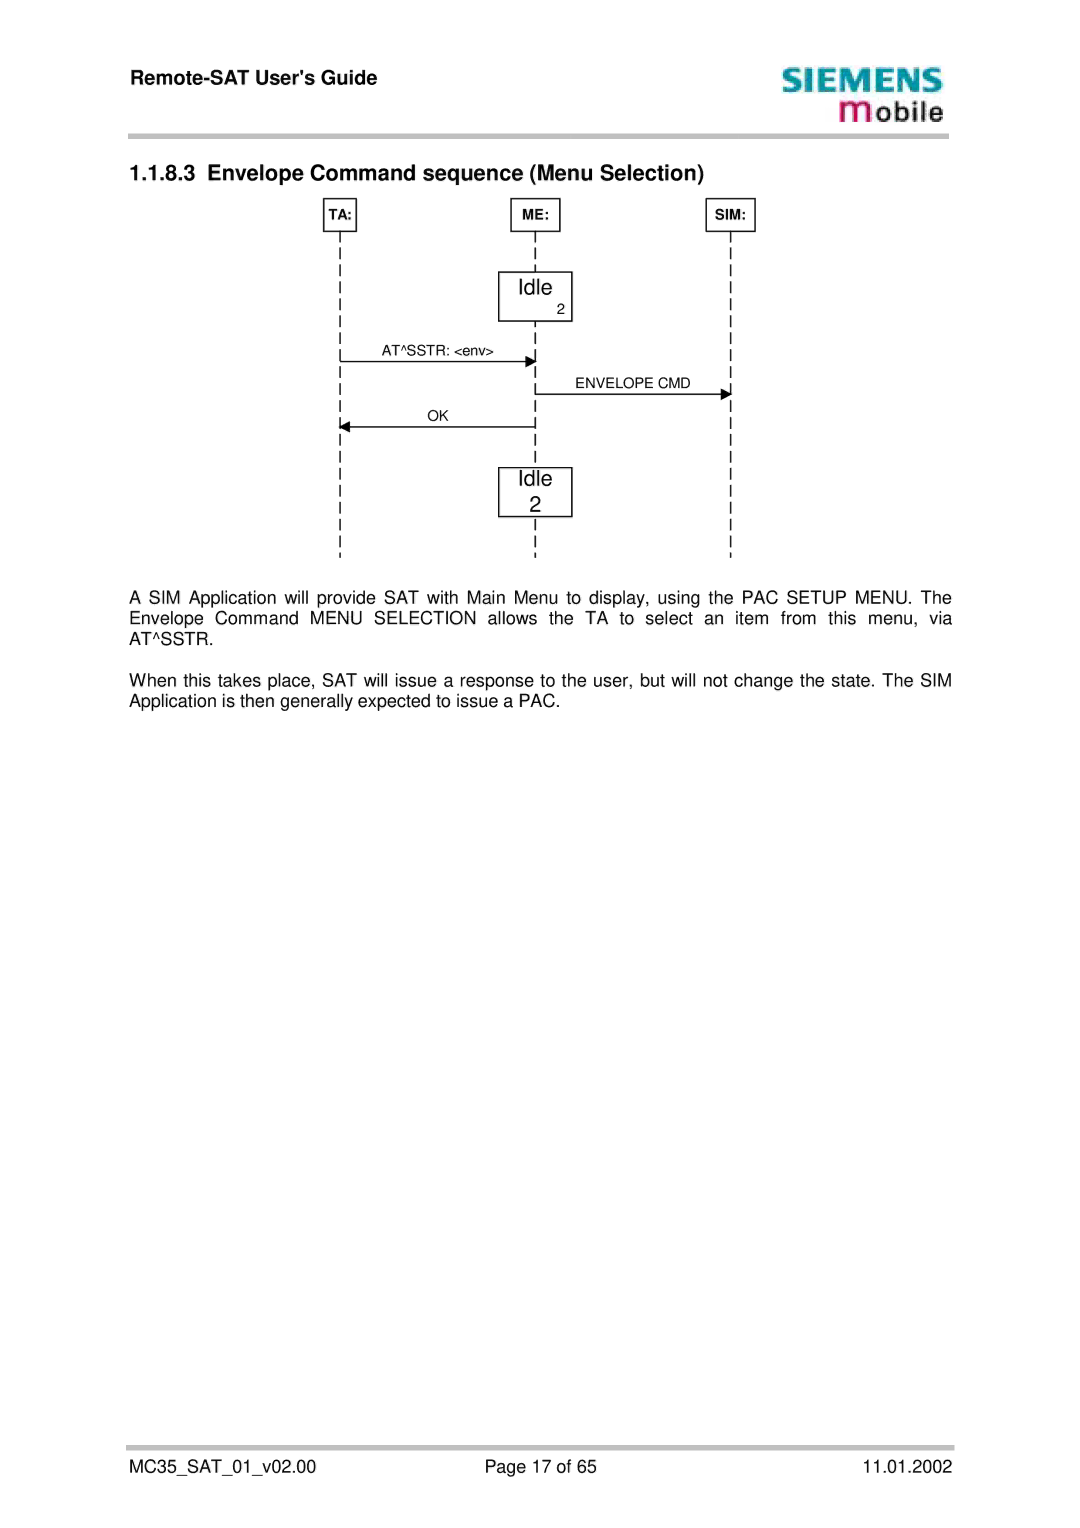 Siemens MC35 manual Envelope Command sequence Menu Selection 